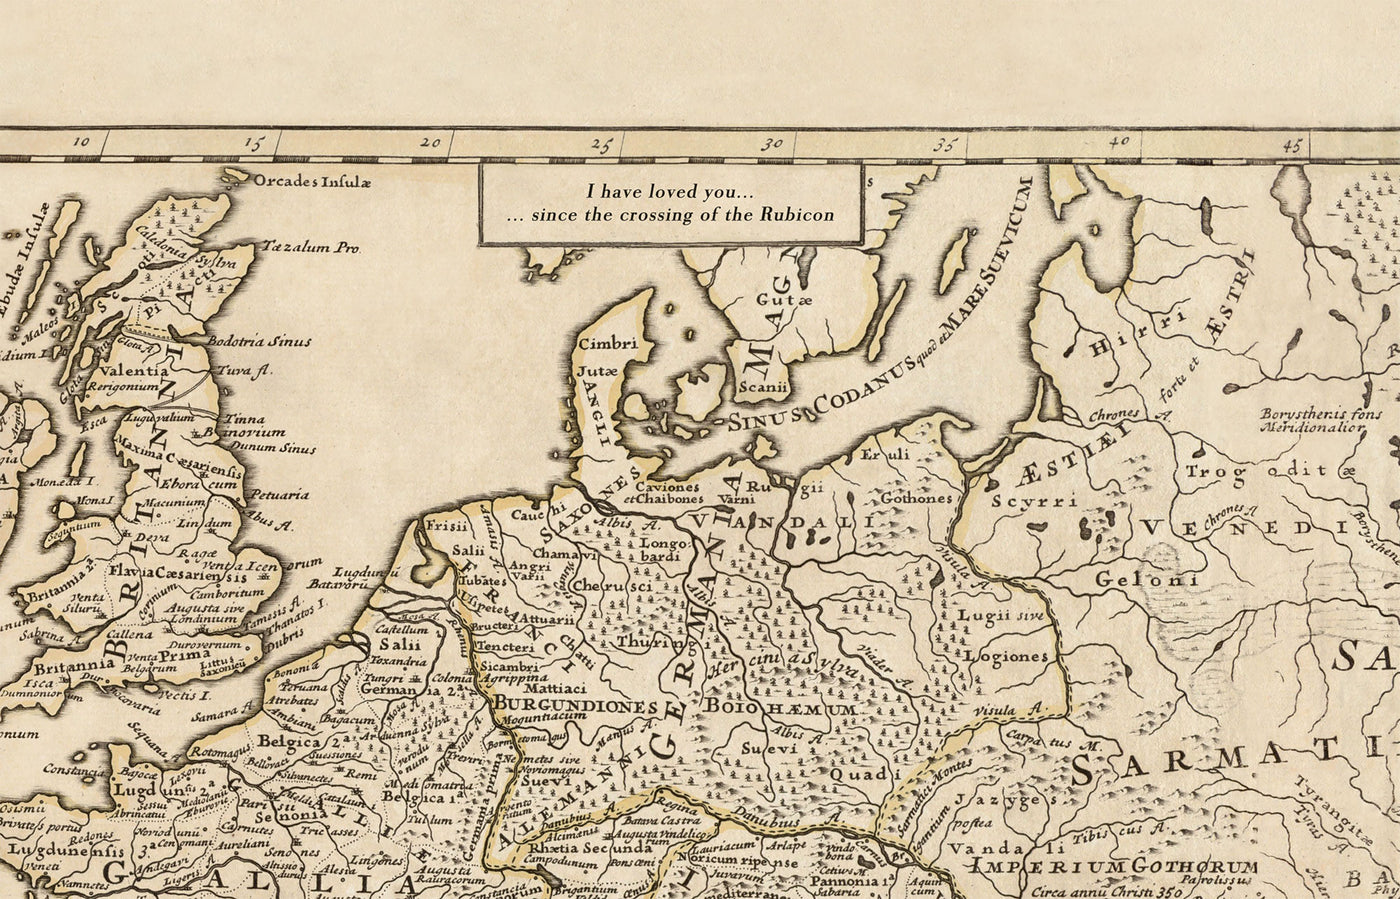 Alte Karte von Südwest-London im Jahr 1746 von John Rocque - Kingston, Hampton Court, Teddington, Surbiton, Themse